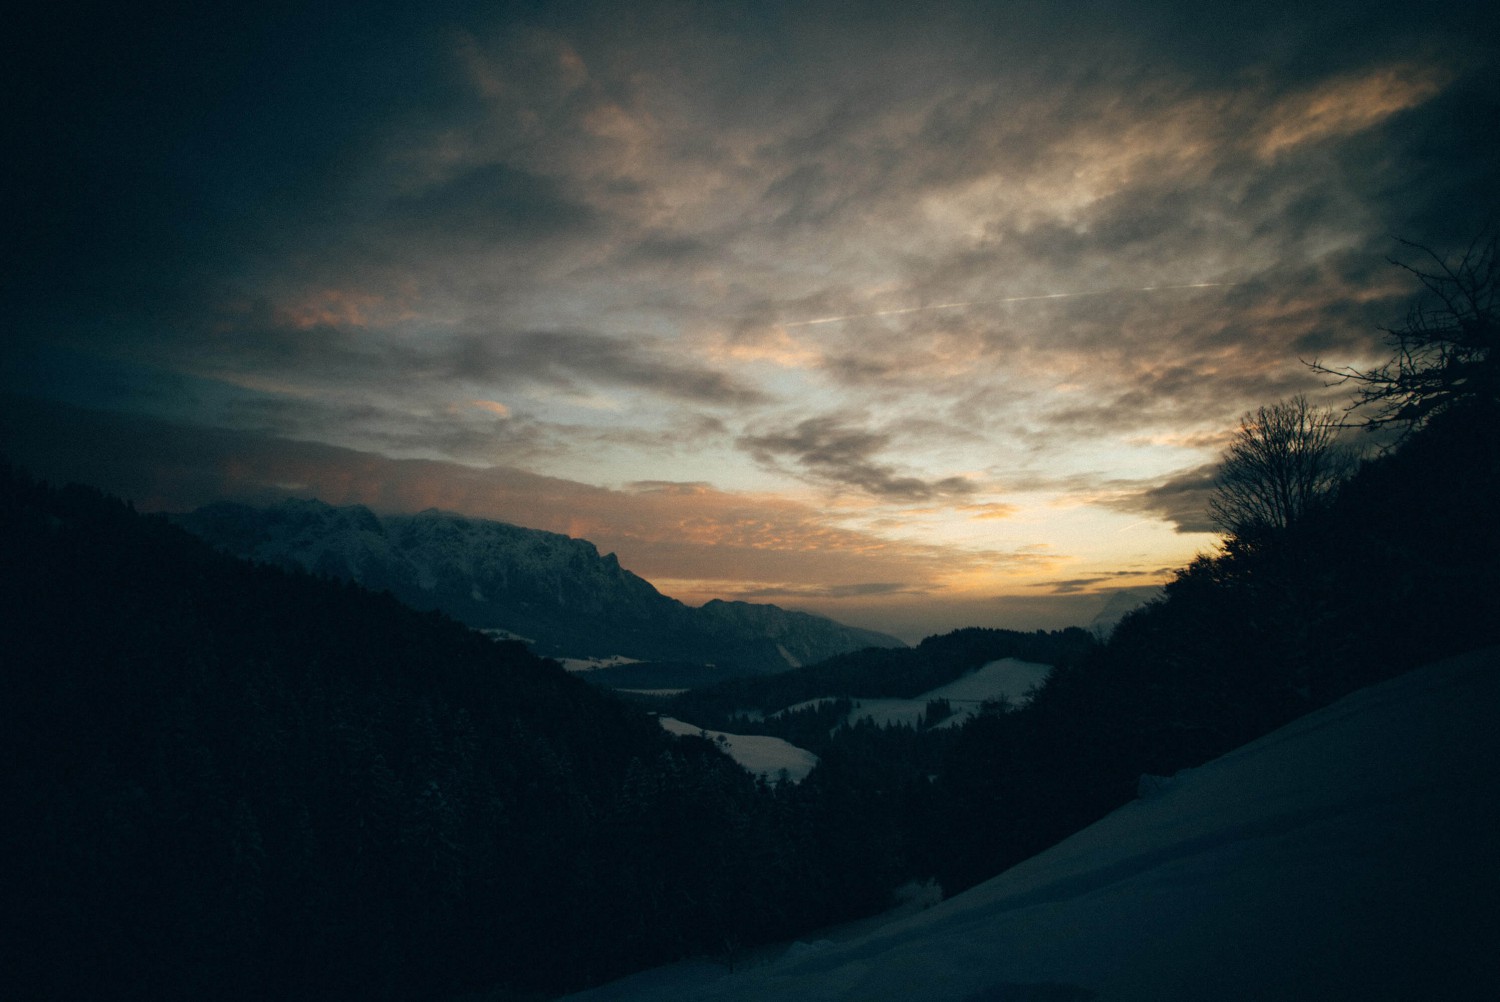 Sonnenuntergang in den Bergen | Fotografieren bei Nacht